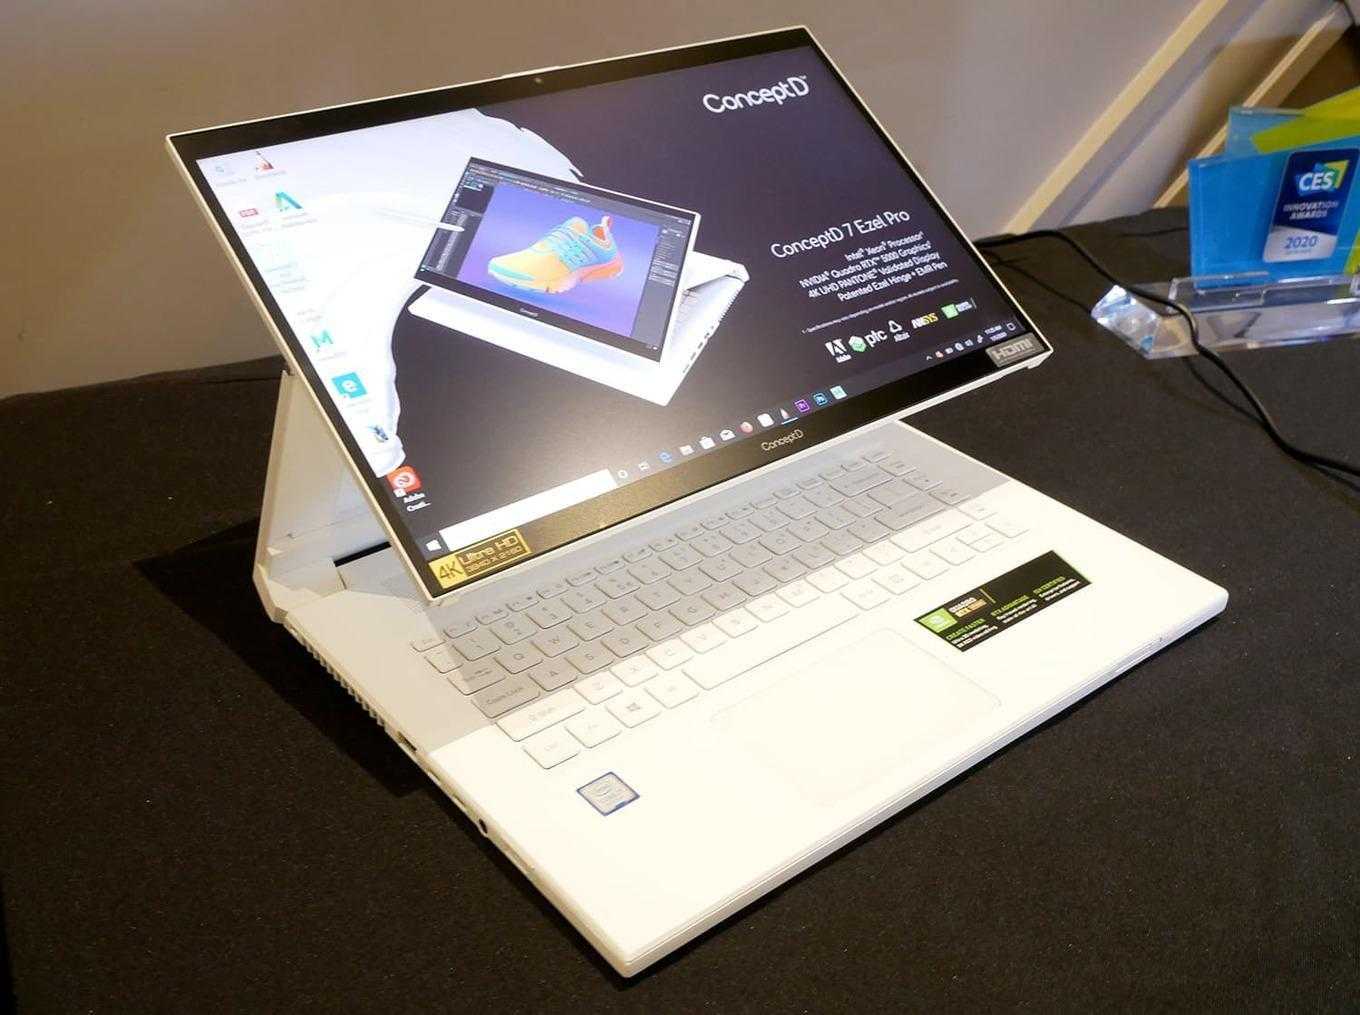 Acer conceptd 7 pro cn715-71p-75g8